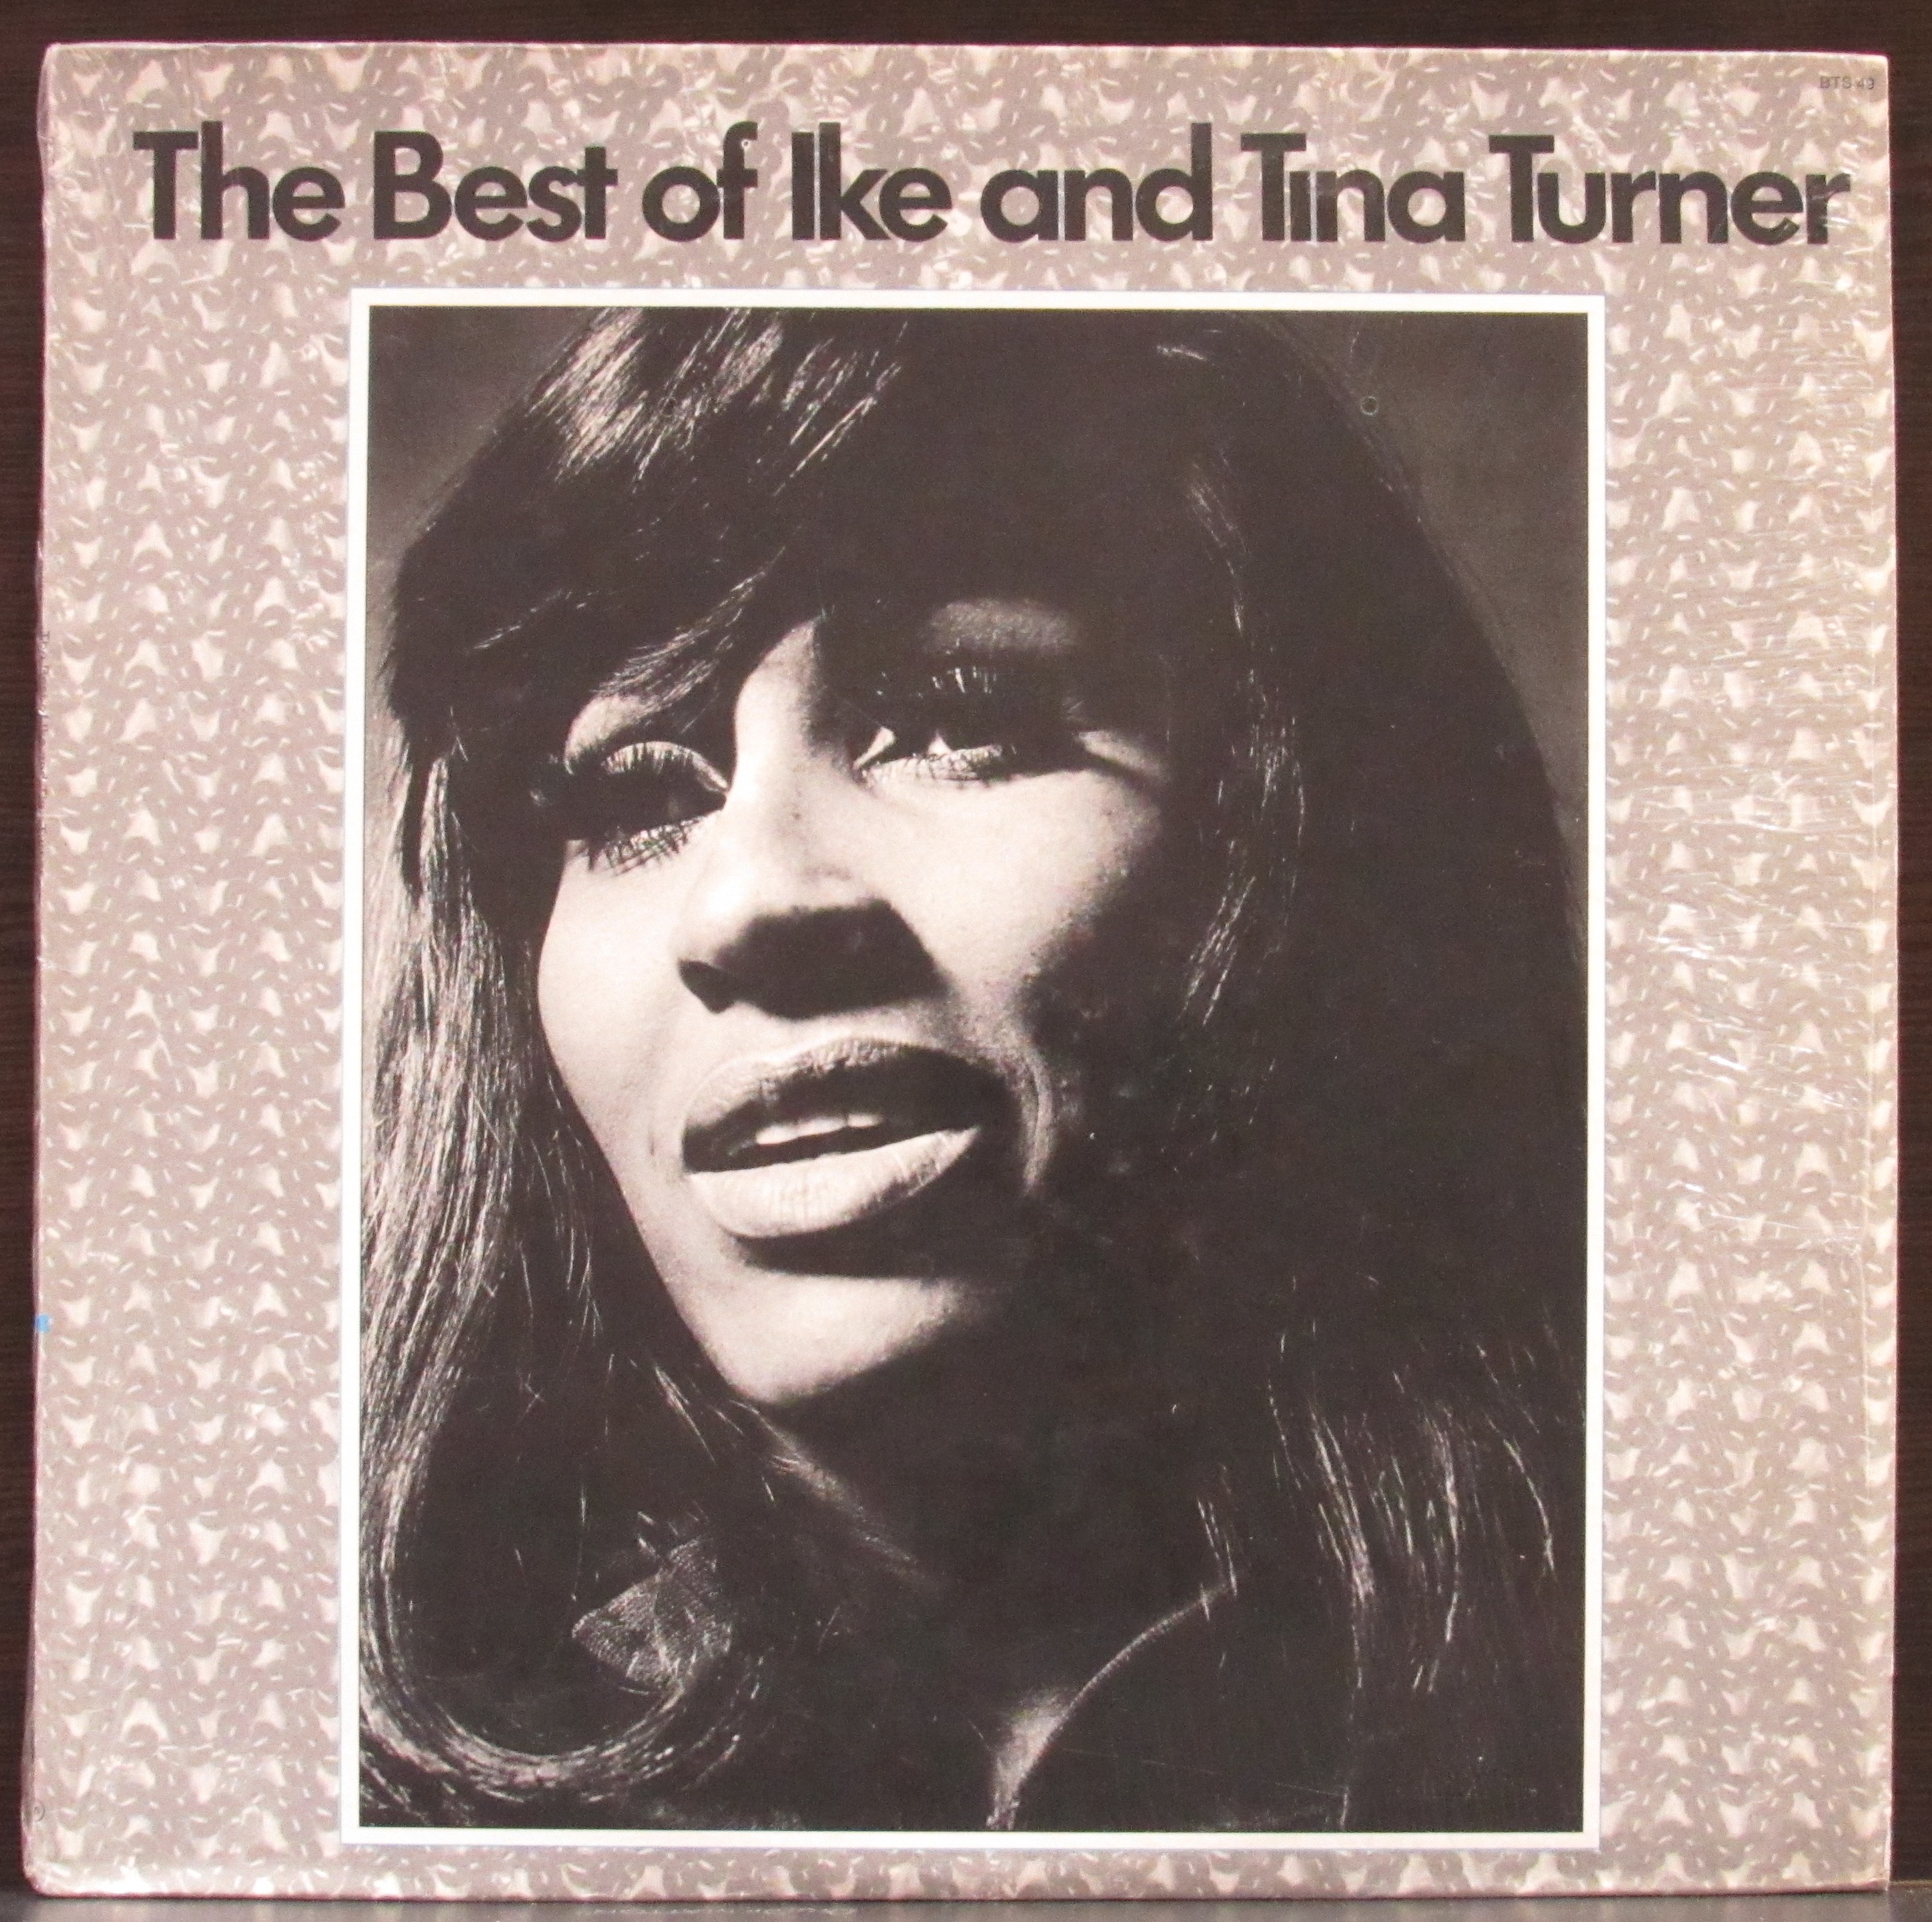 Слушать тернер бест. Ike & Tina Turner.